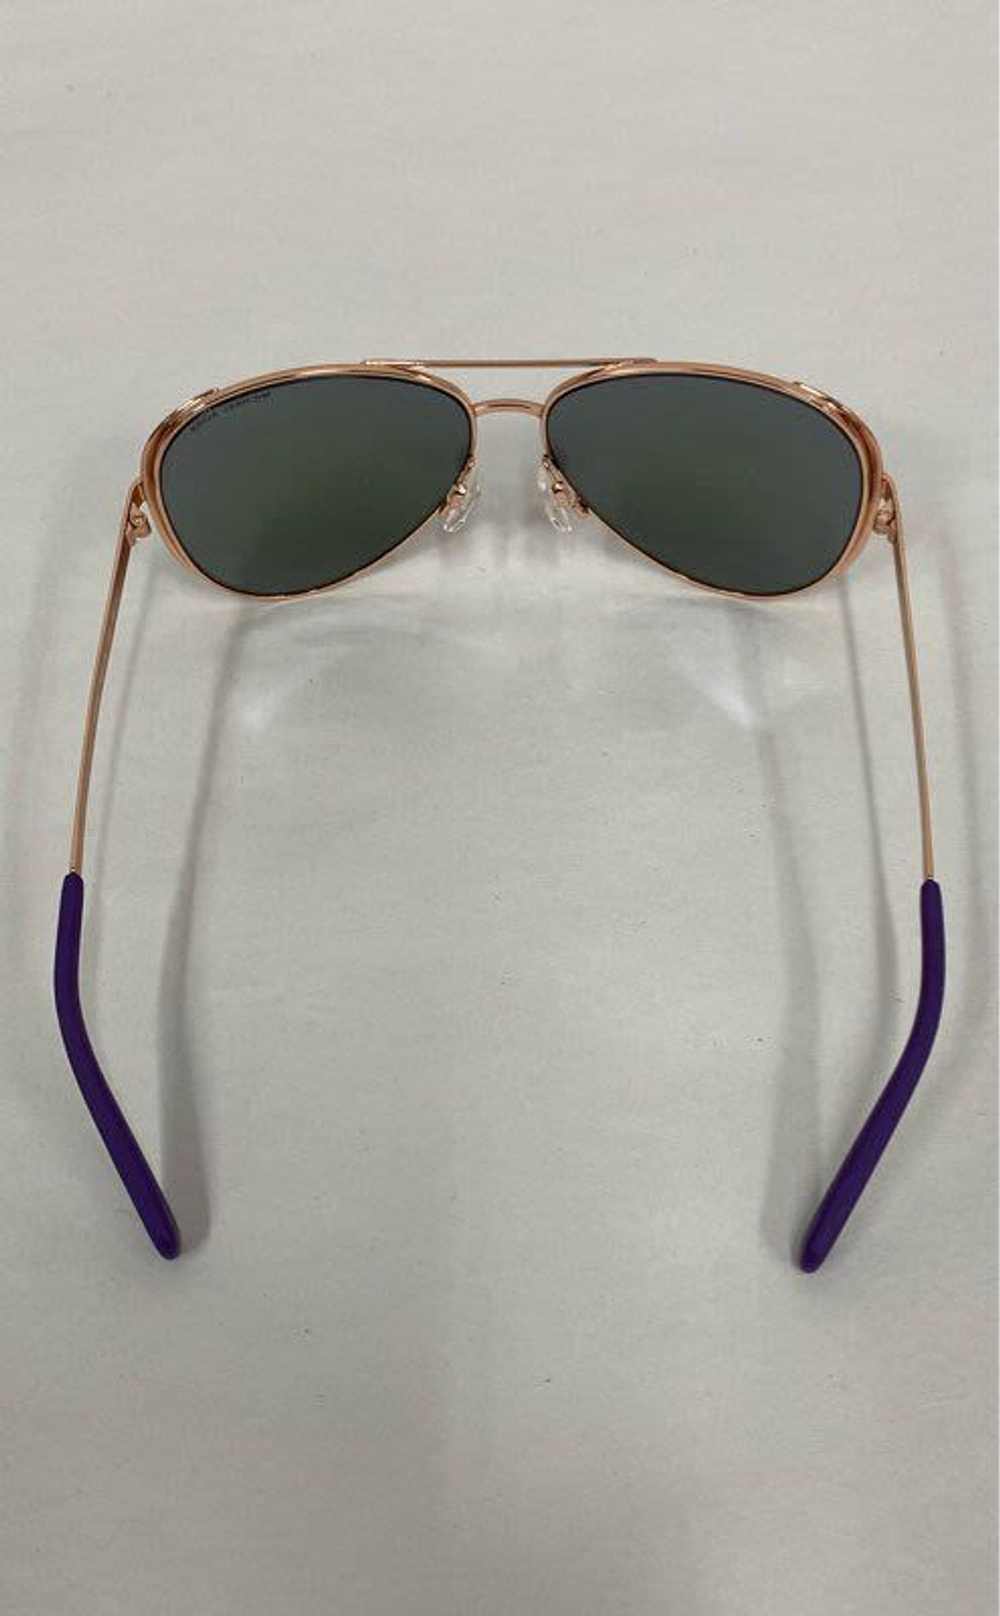 Michael Kors Purple Sunglasses - Size One Size - image 3